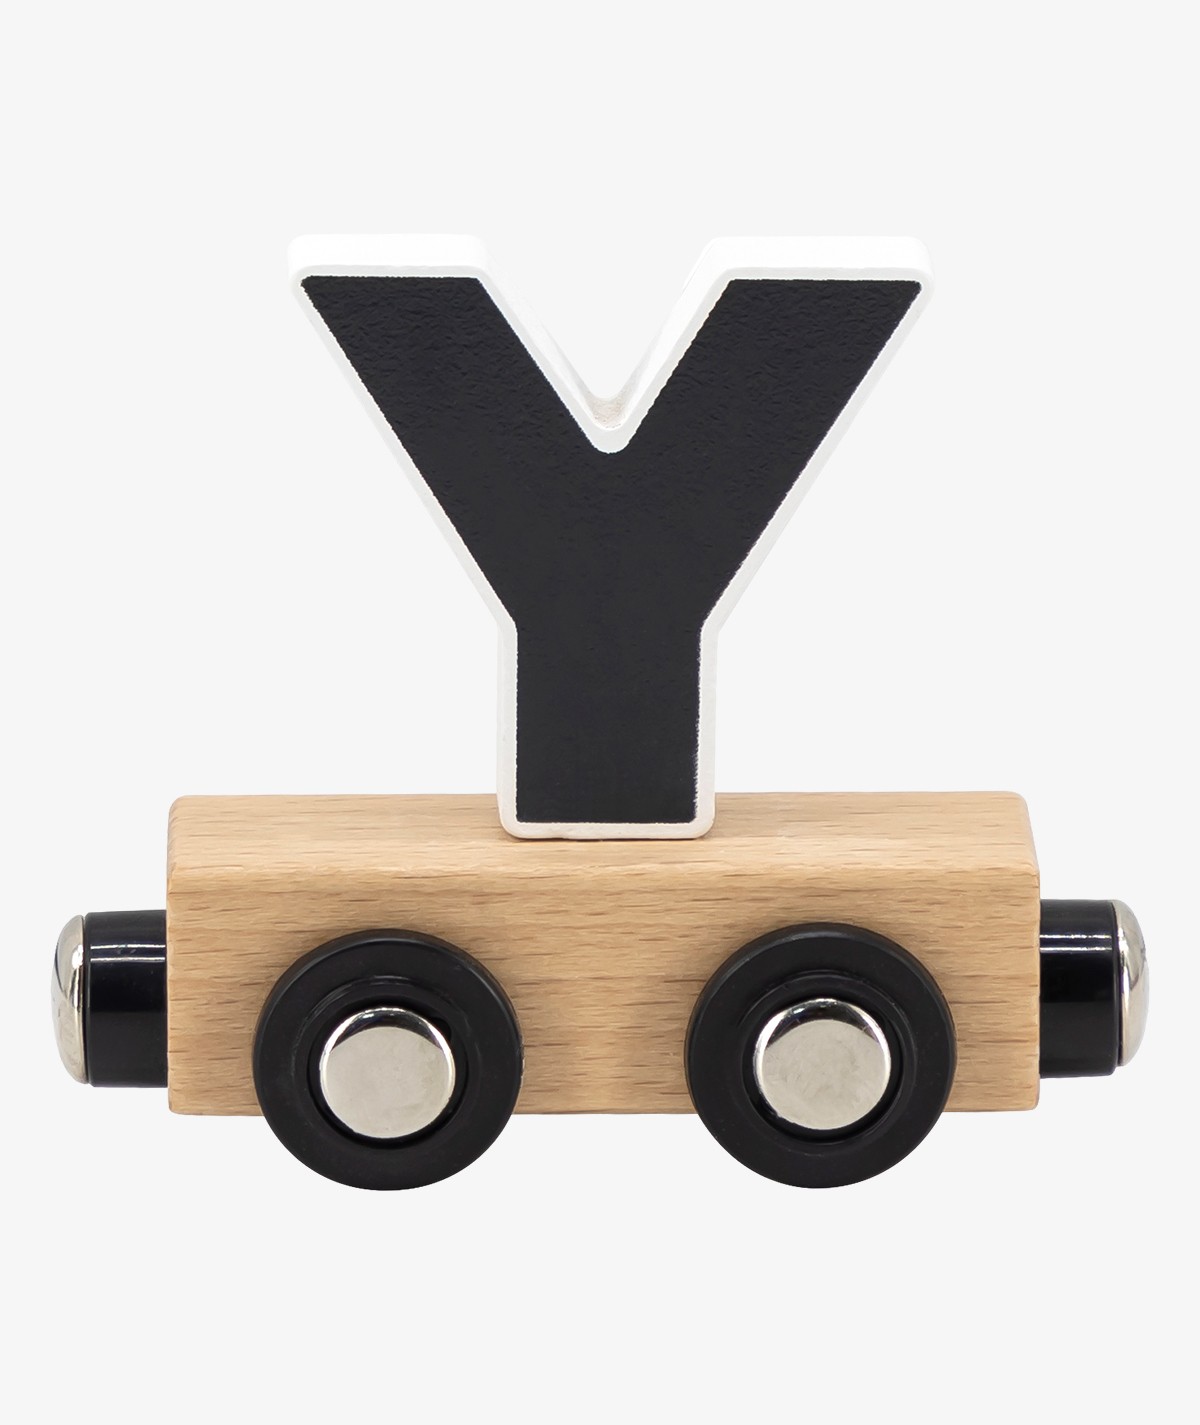 Wooden Letter Train "Y"